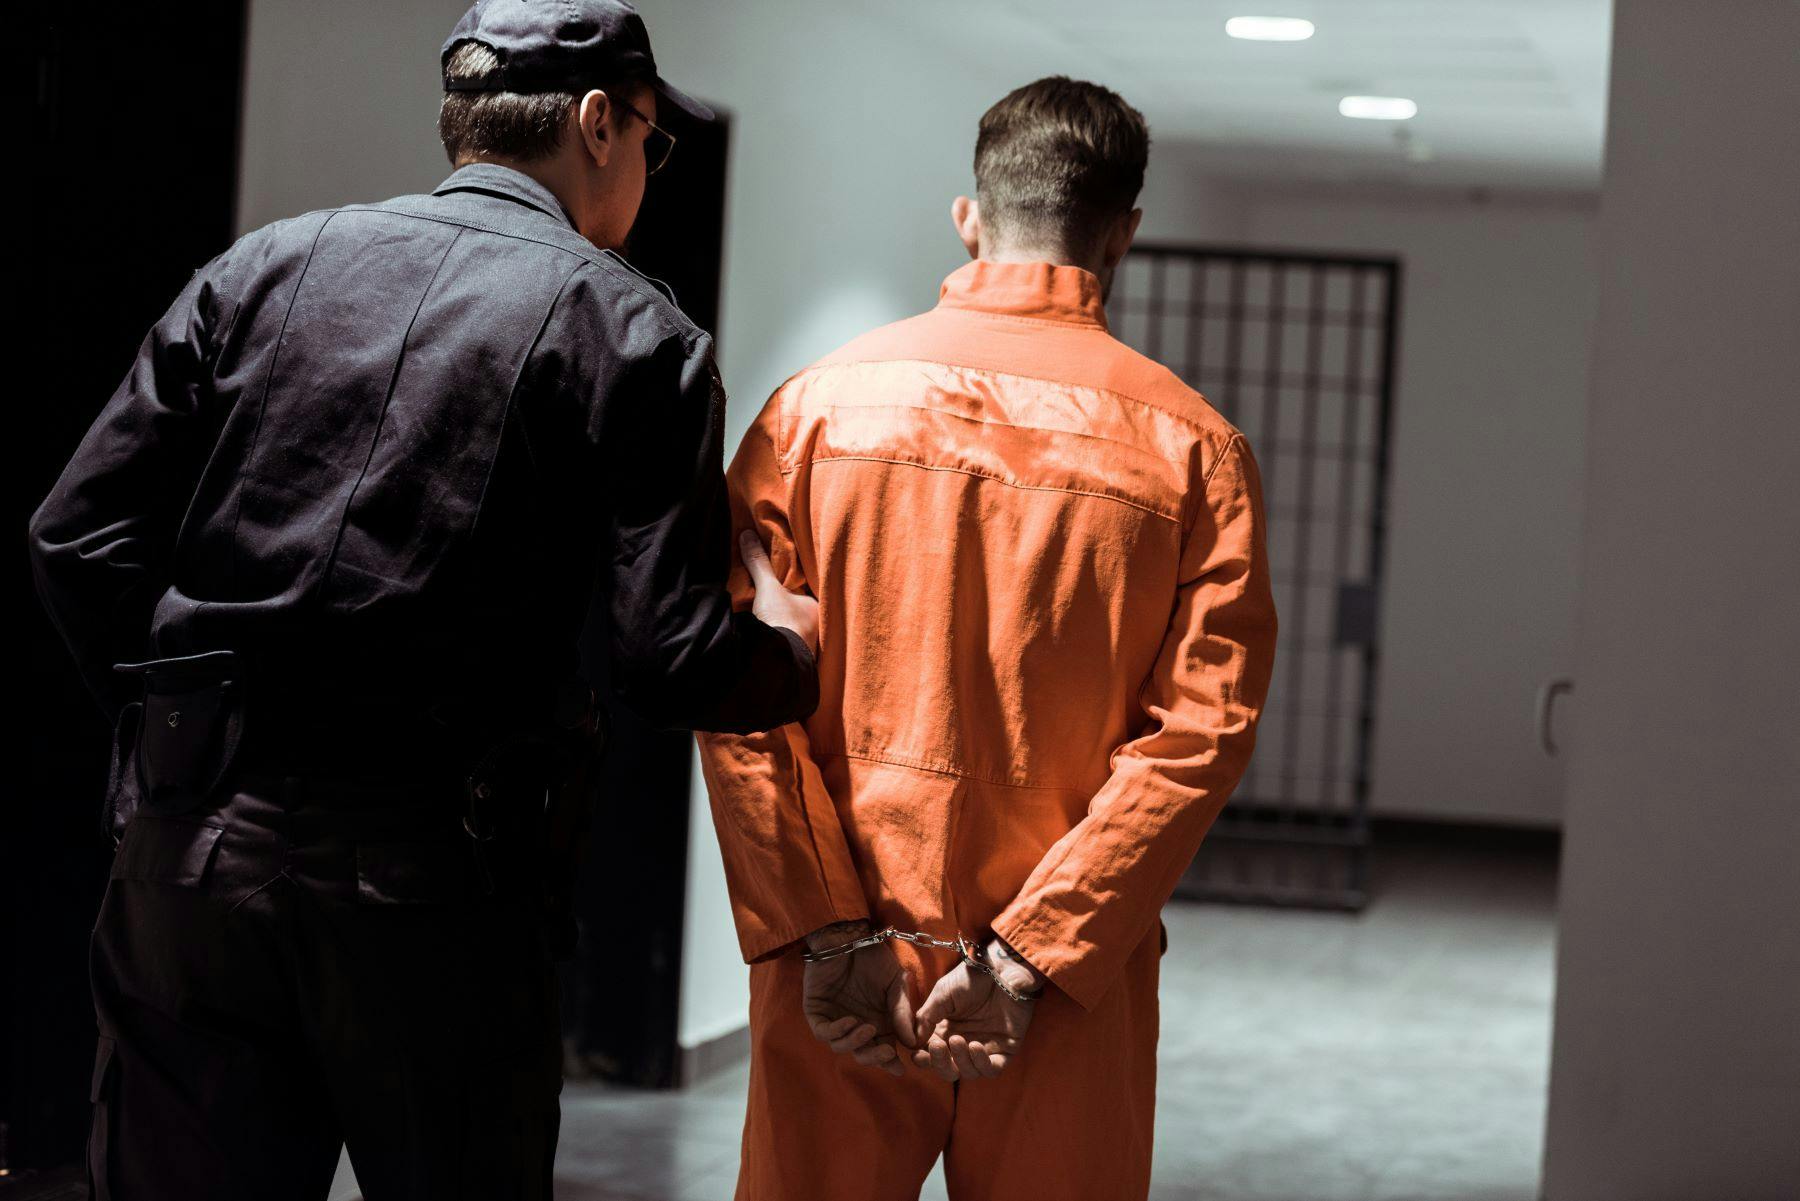 Corrections officer leading prisoner down hallway